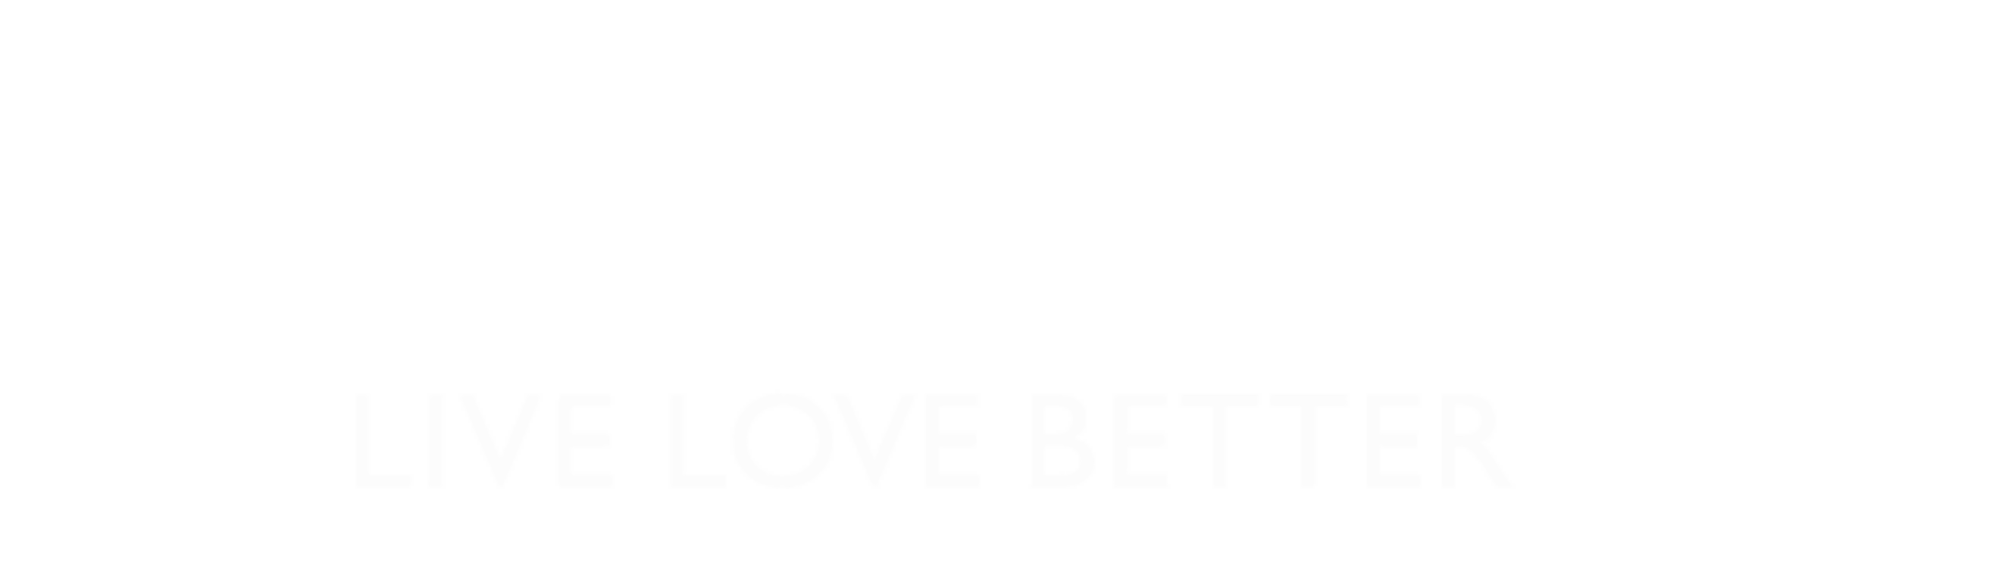 LLB_Website_Titles_Foundacion Logo Blanco